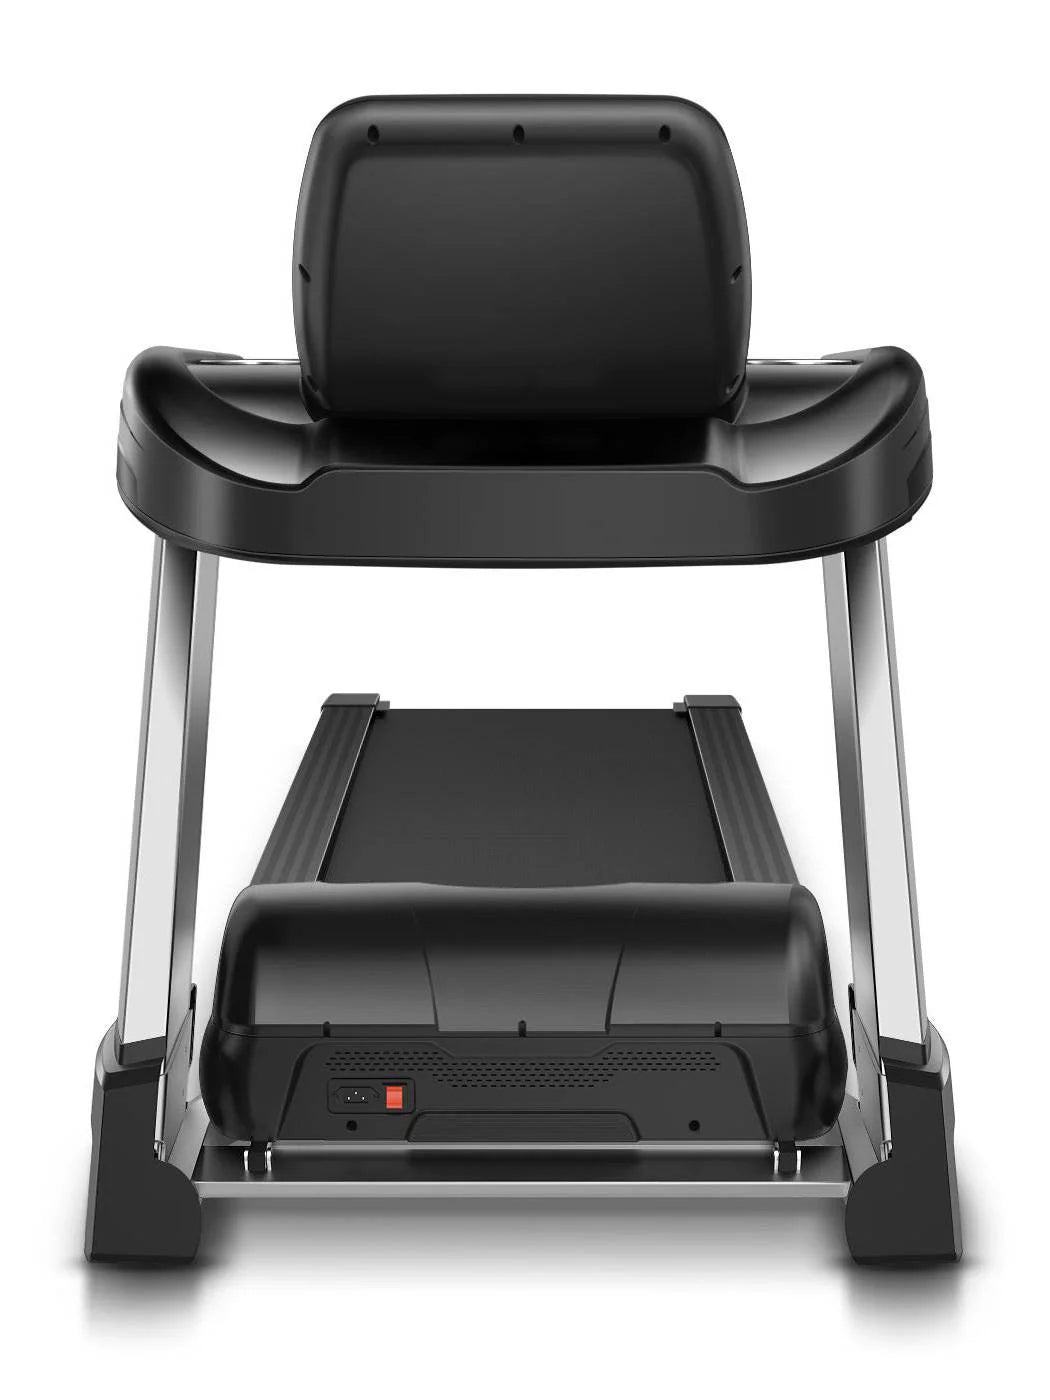 French Fitness FT500 Light Commercial Folding Treadmill (New)